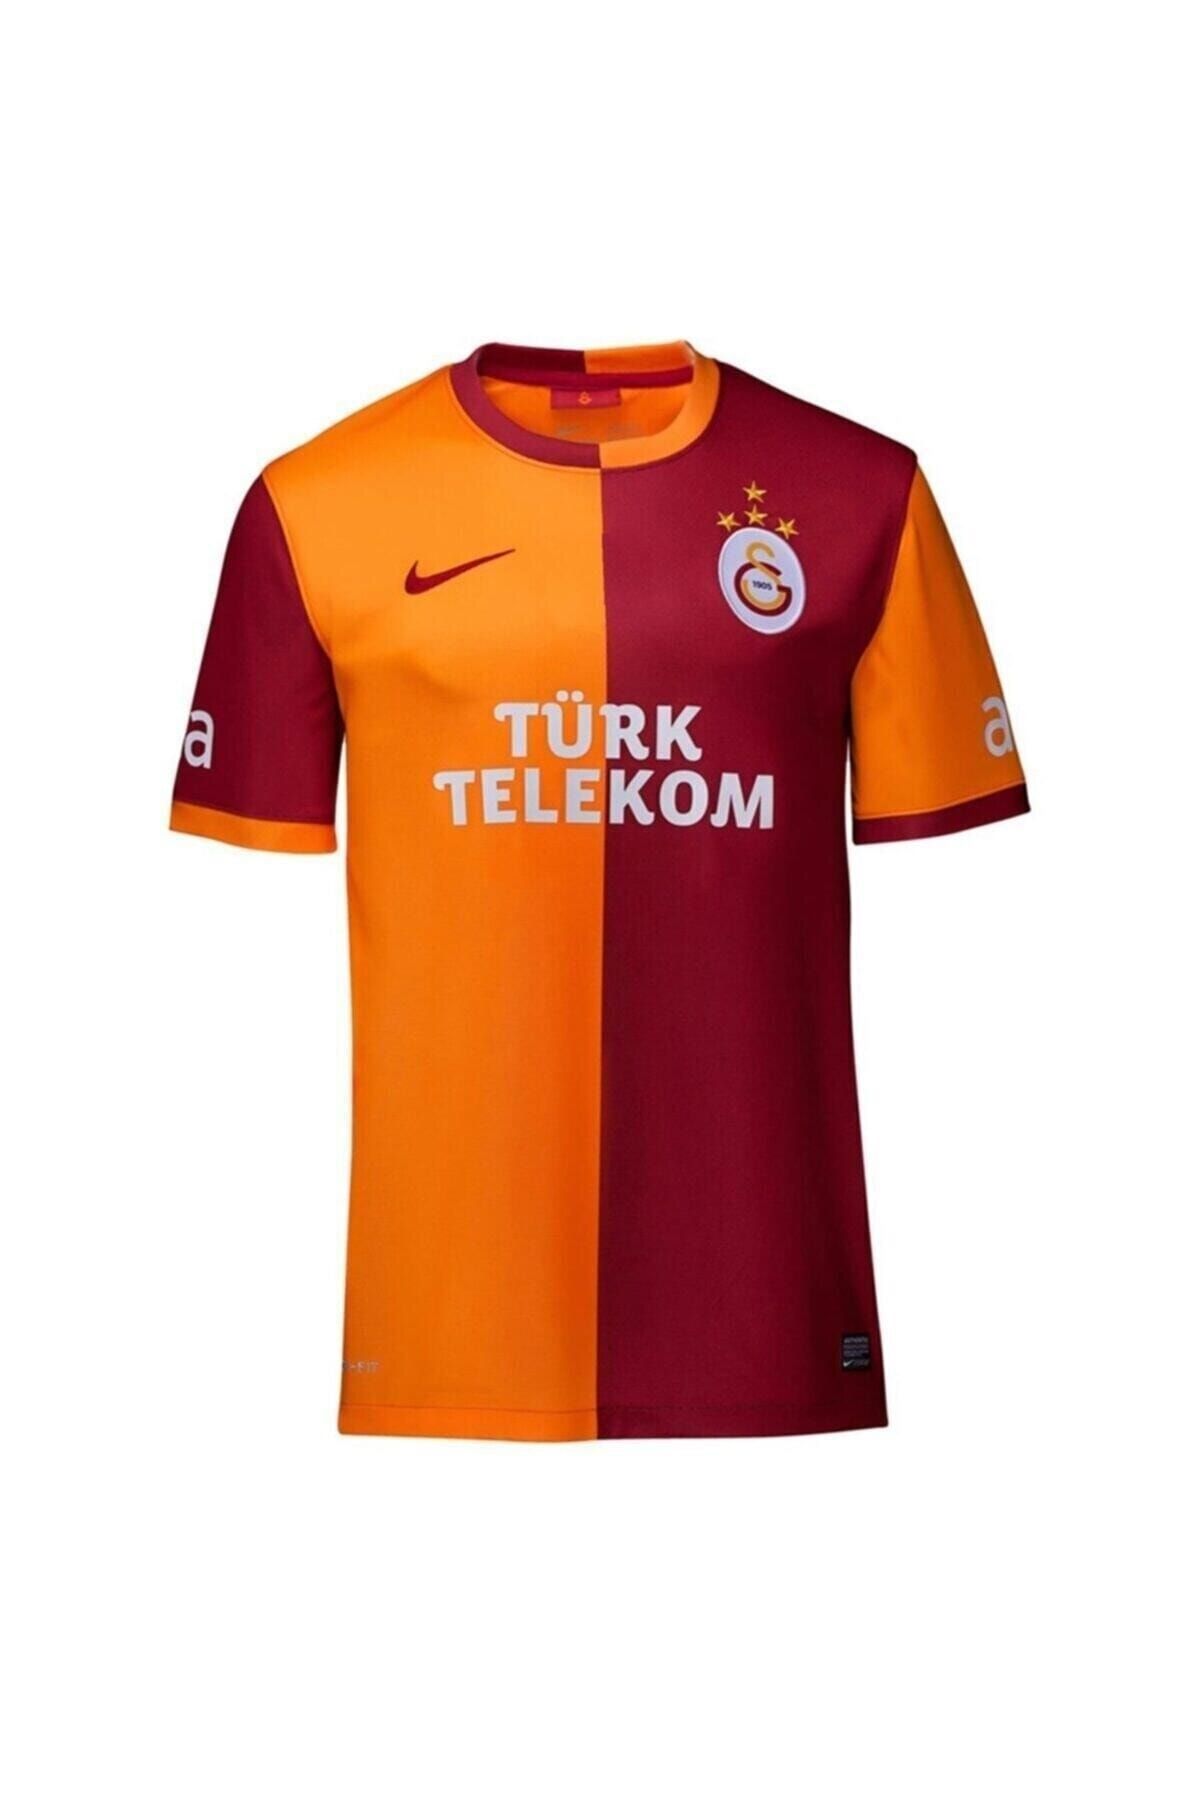 Galatasaray Parçalı Forma Orjinal Maç Forması